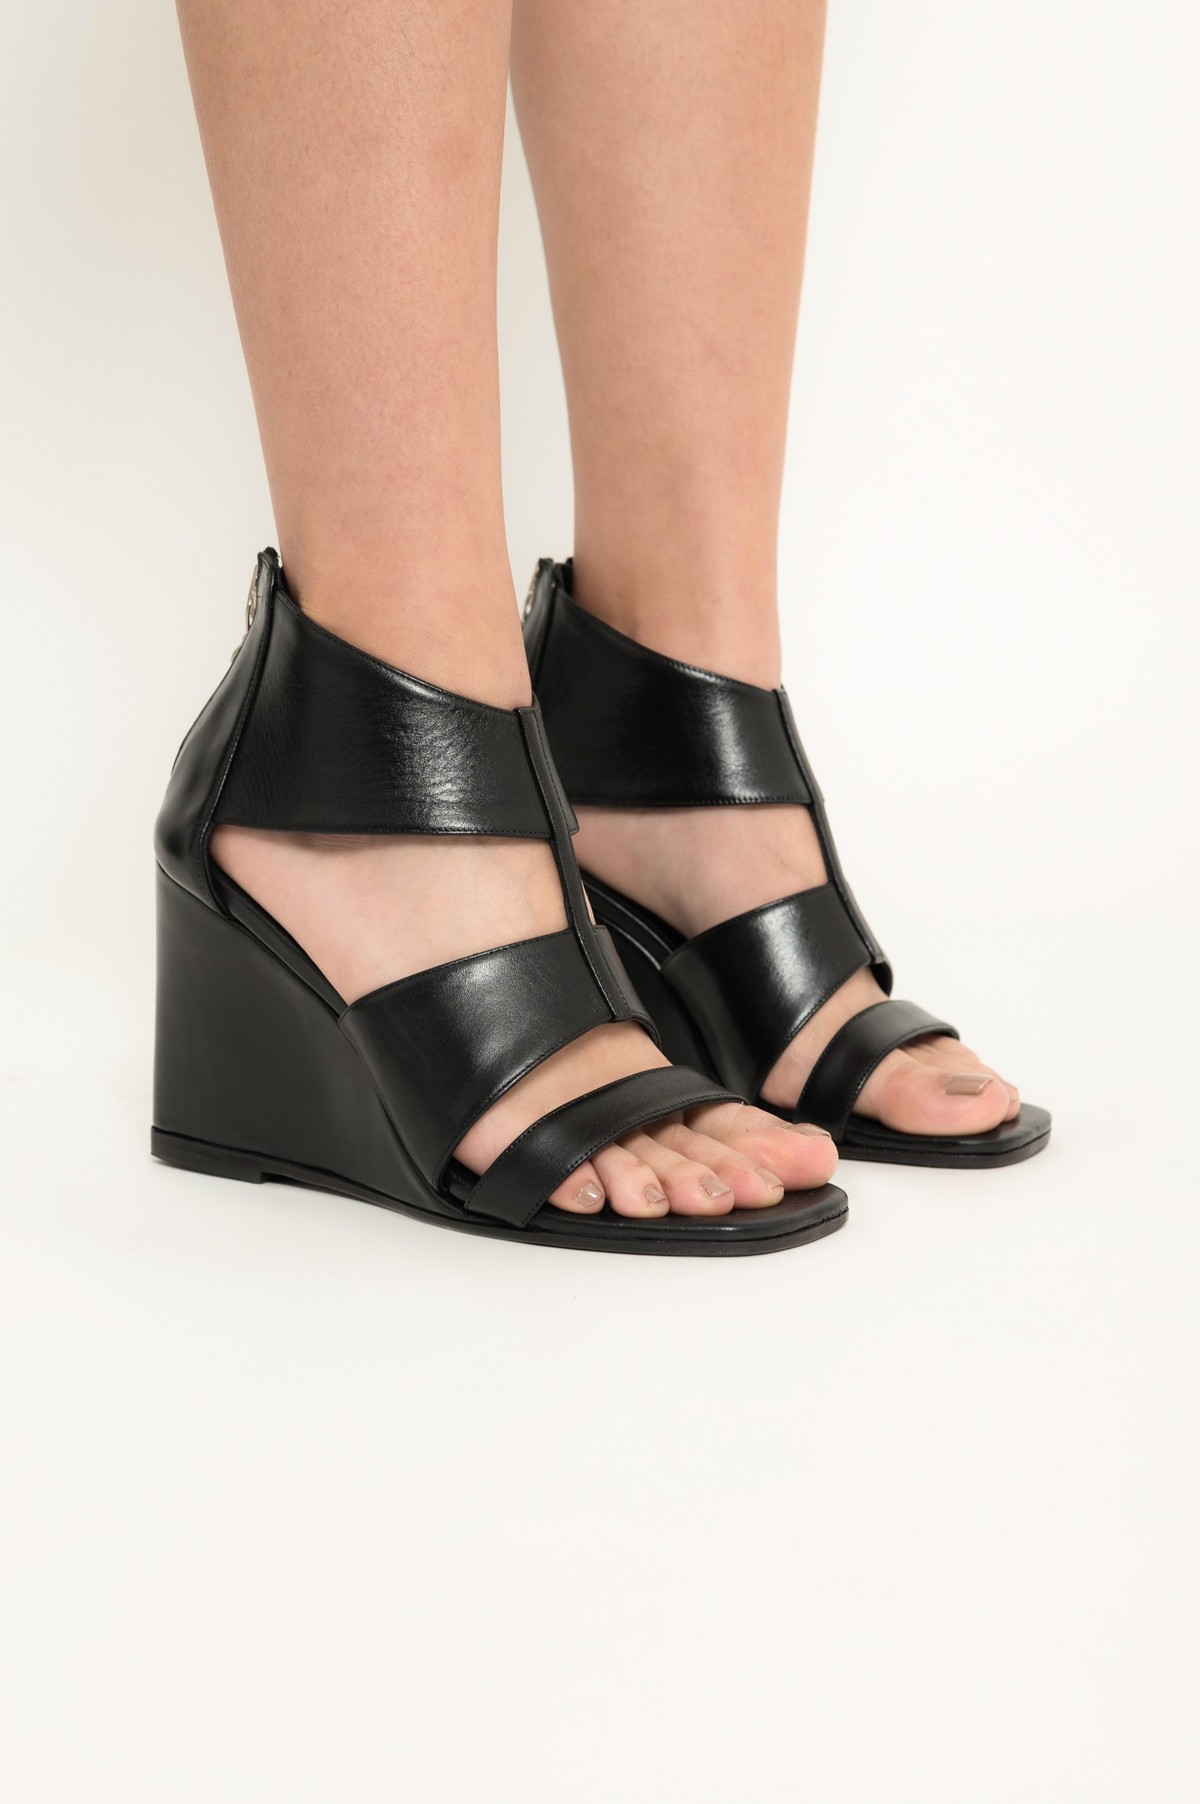 sandália anabela em couro | wedge leather sandals